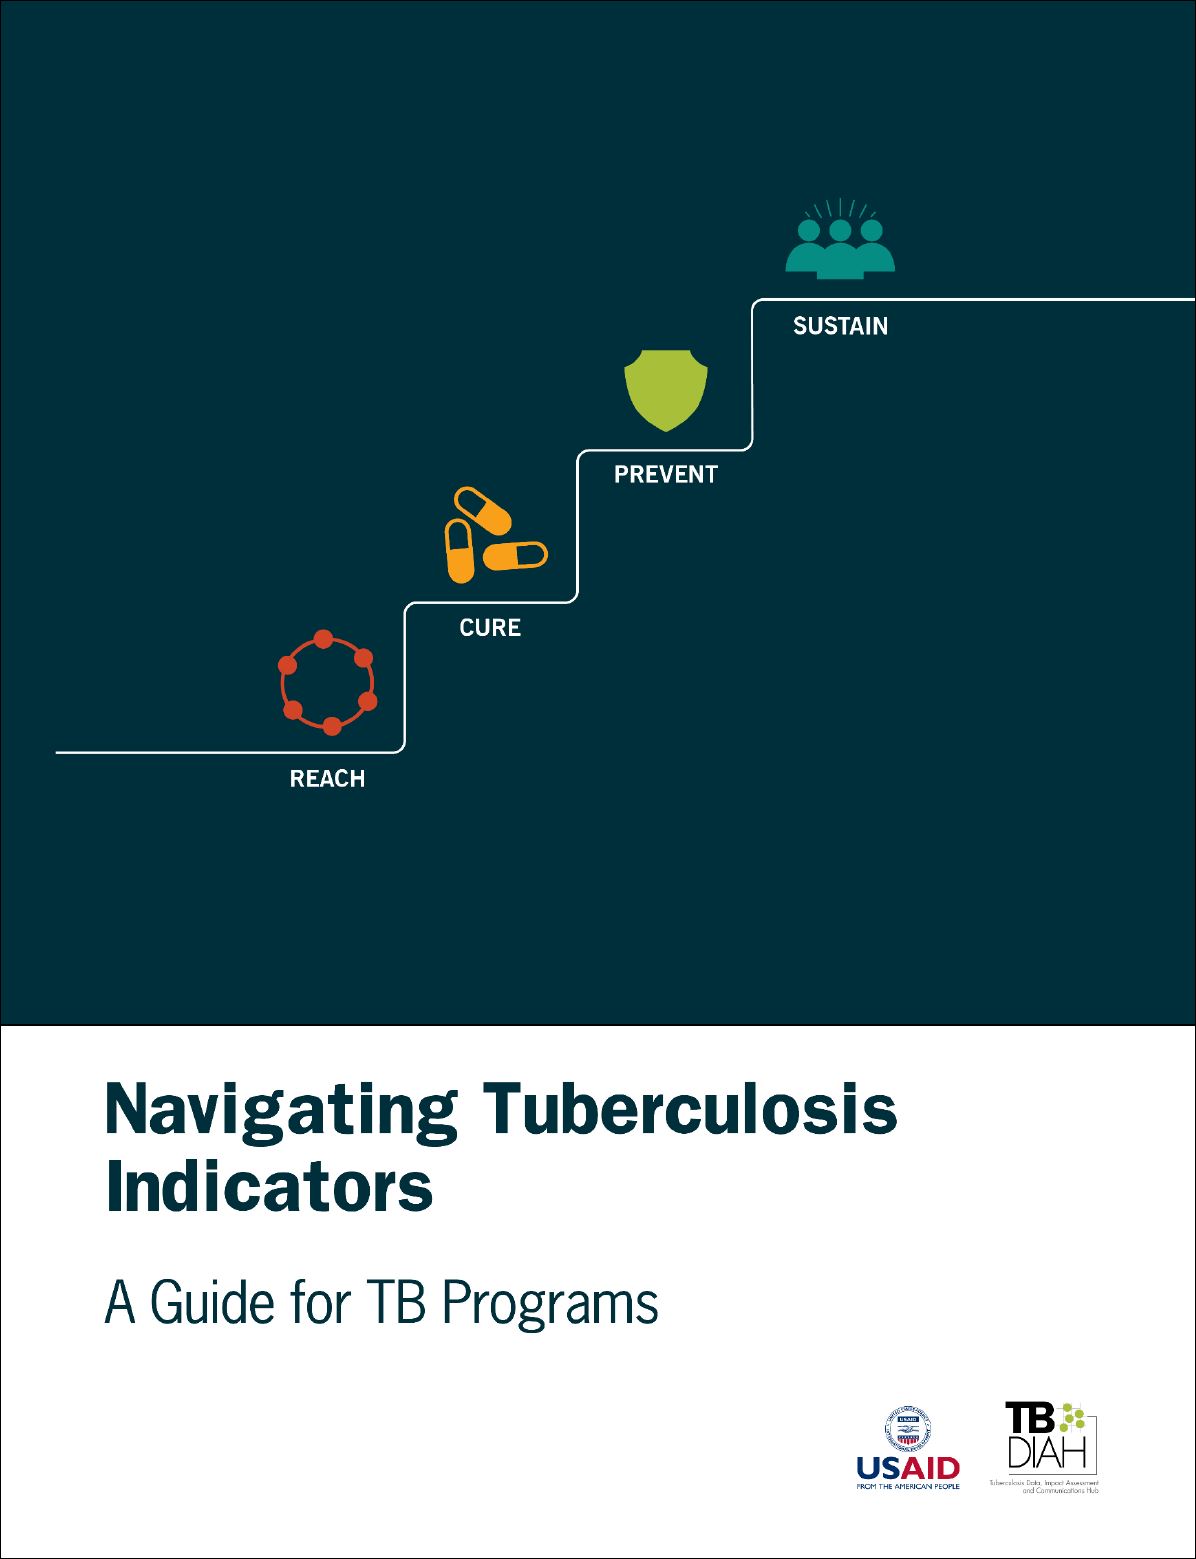 Navigating Tuberculosis Indicators: A Guide for TB Programs